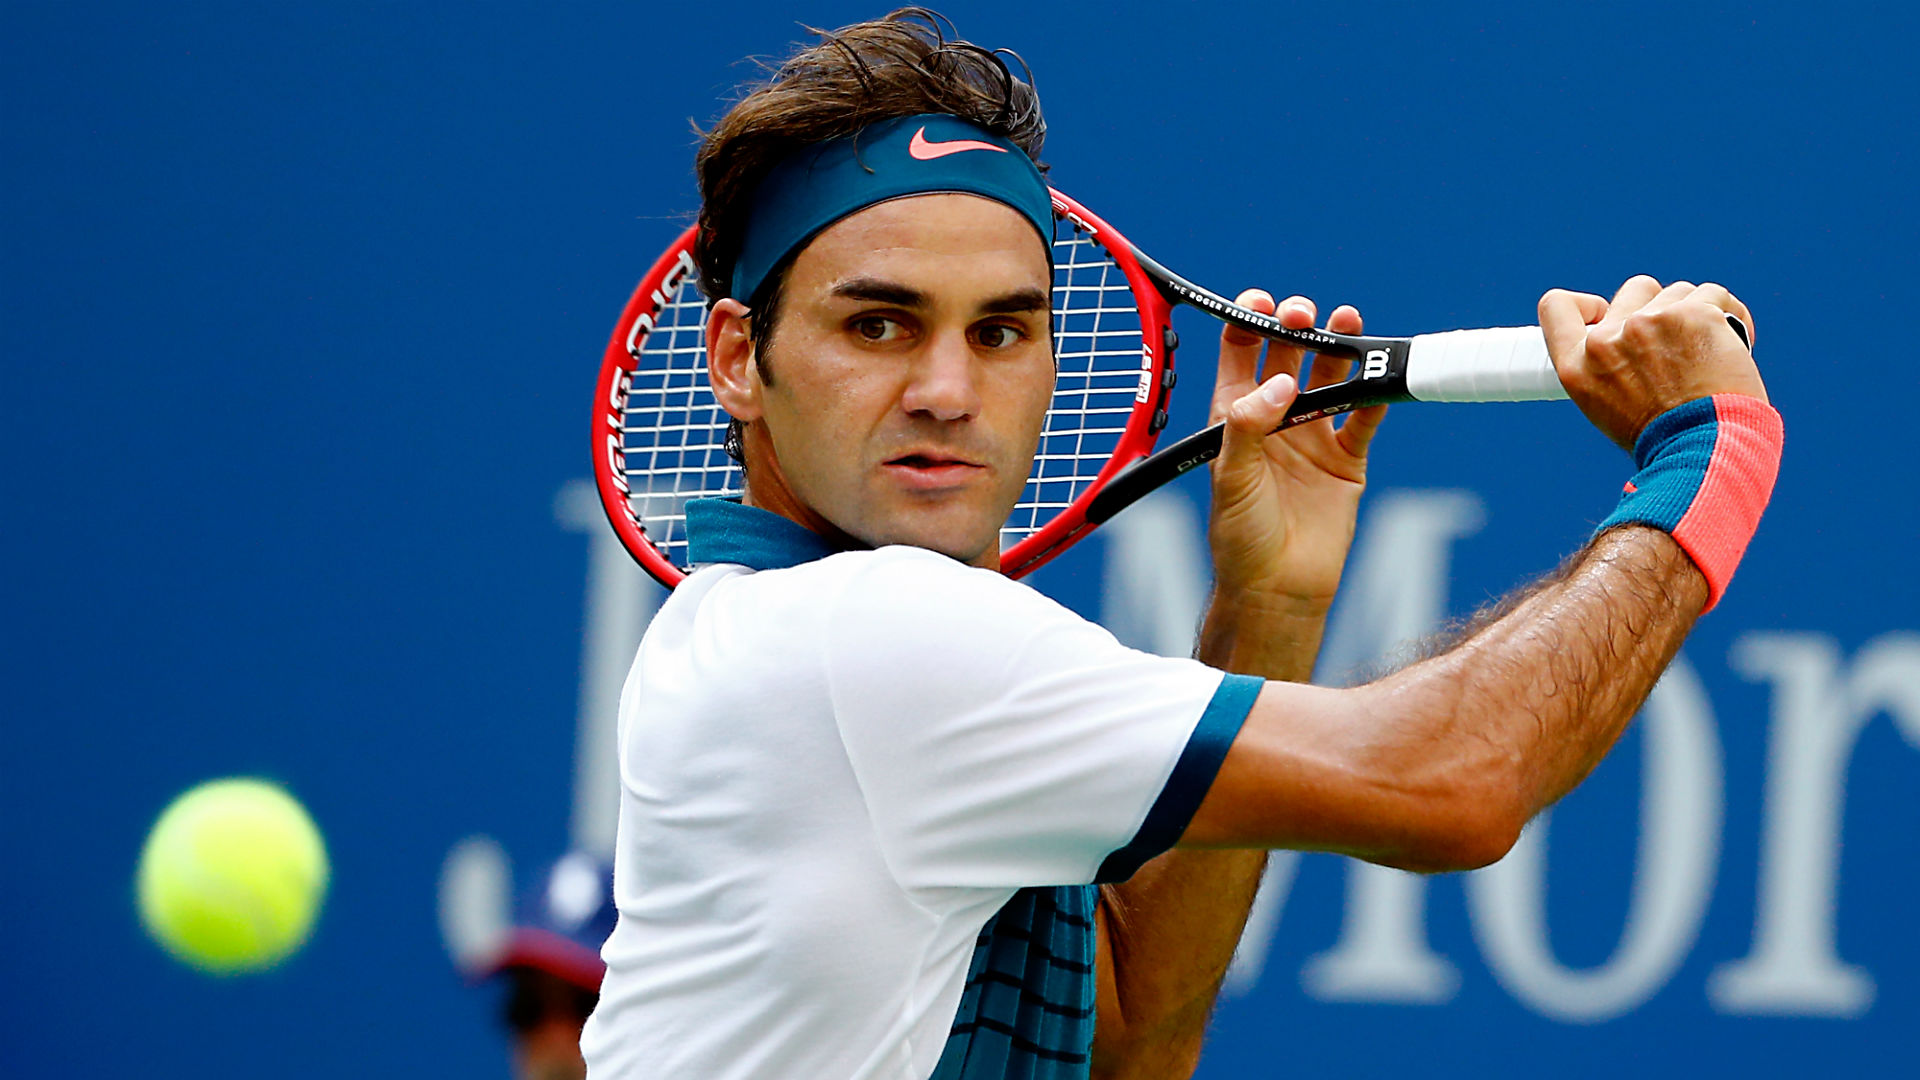 Roger Federer #6